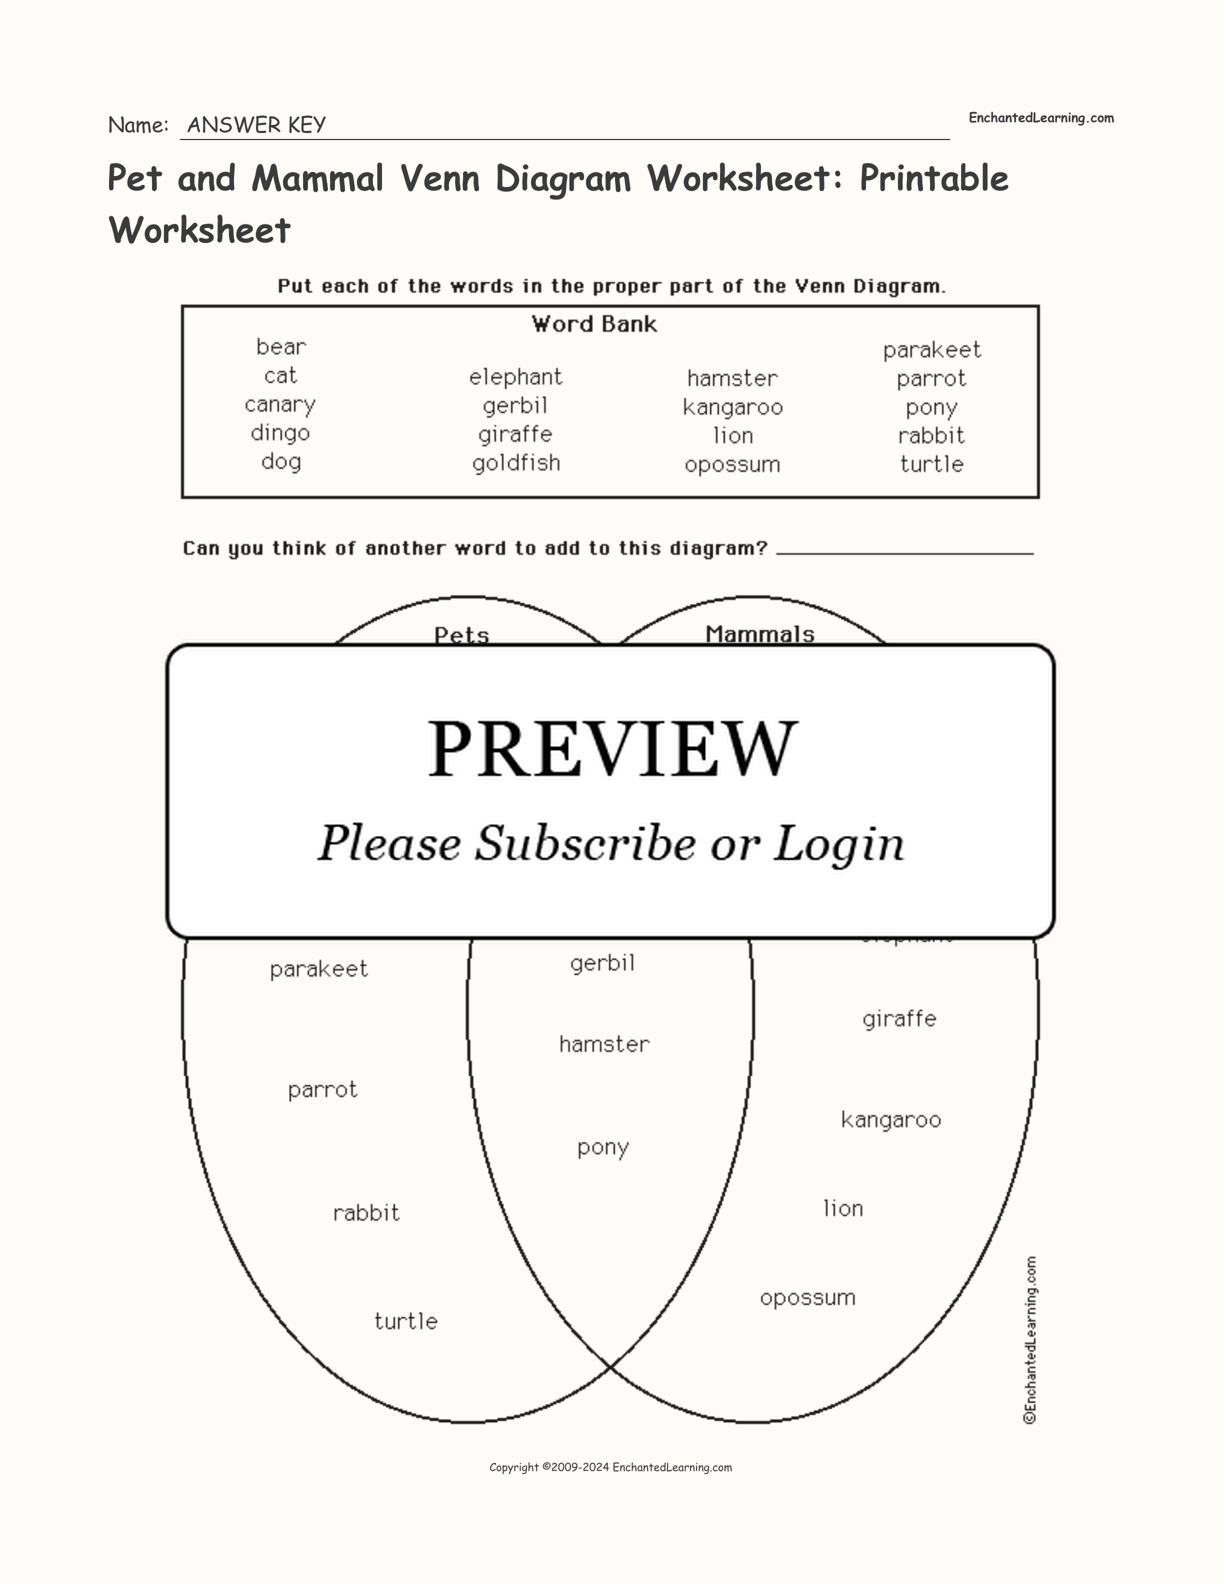 Pet and Mammal Venn Diagram Worksheet: Printable Worksheet interactive worksheet page 2